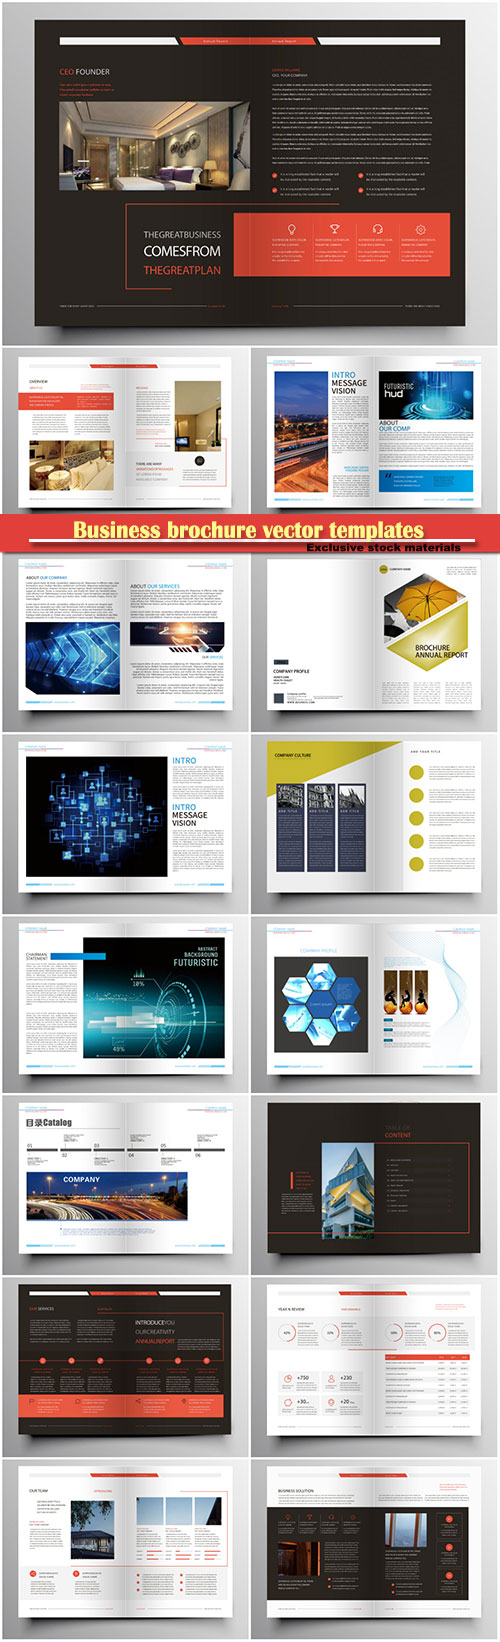 Business brochure vector templates, magazine cover, business mockup, education, presentation, report # 68